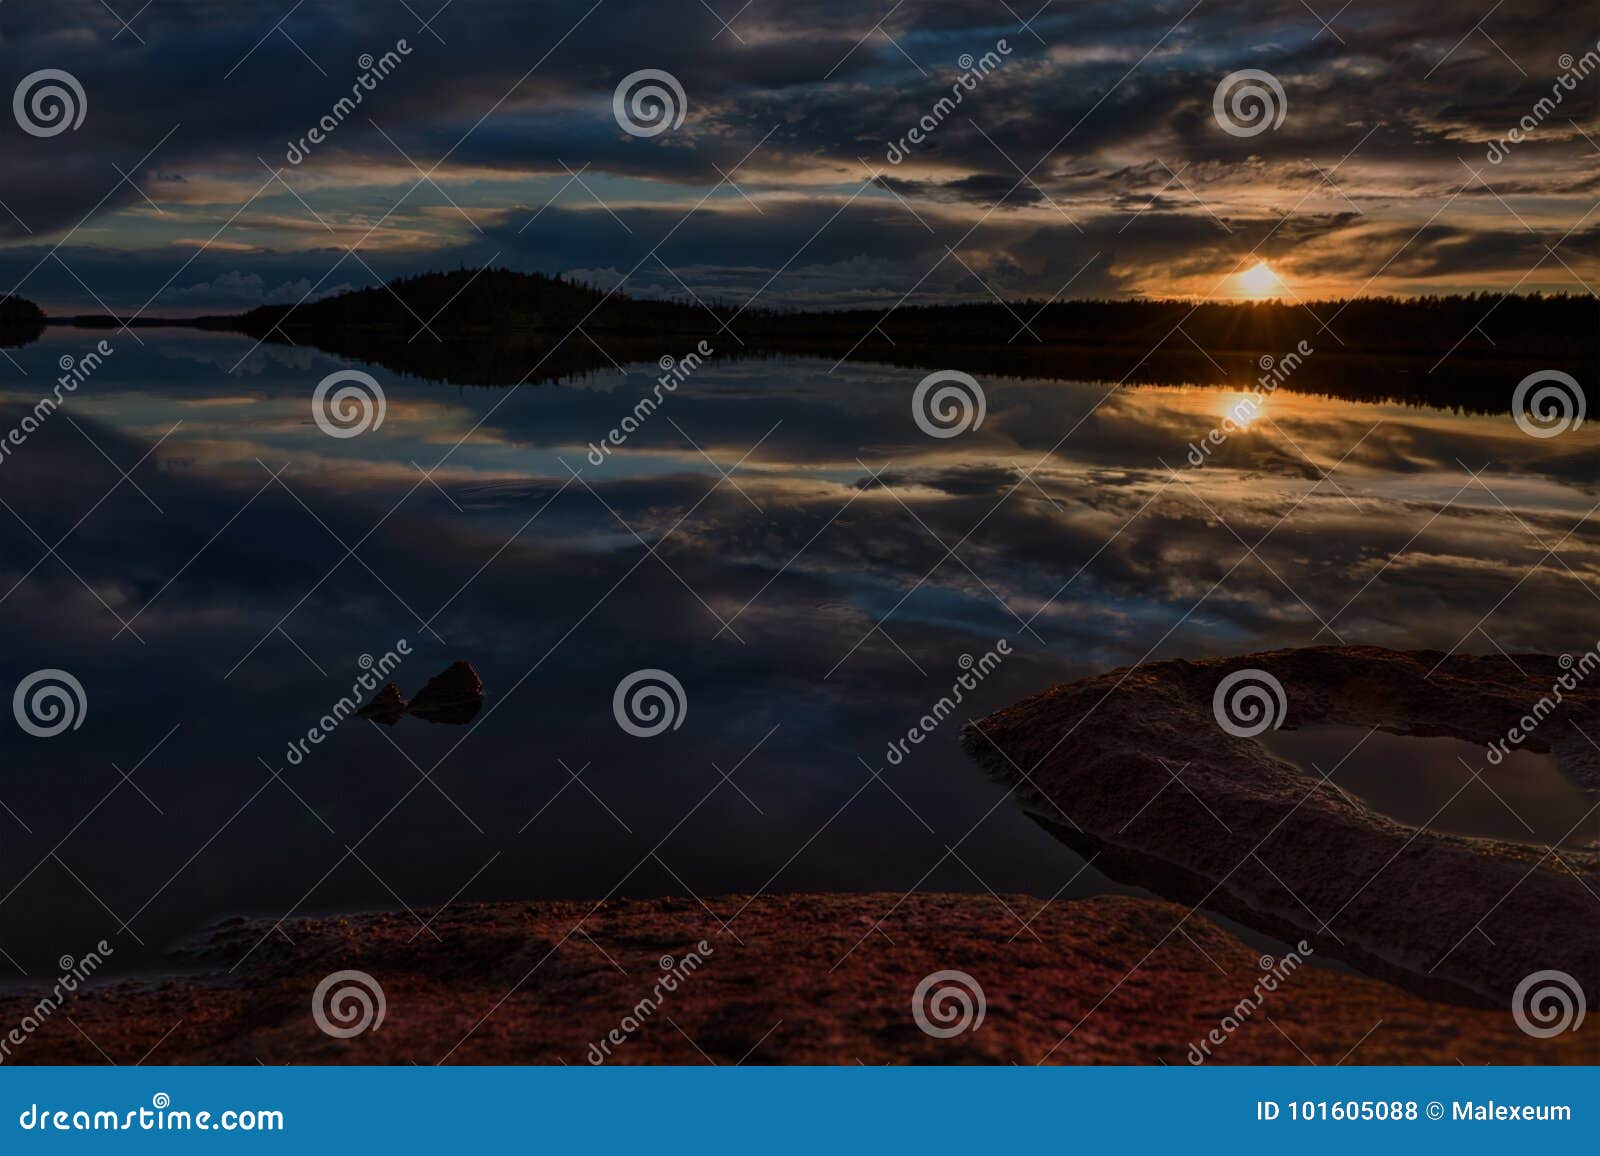 beautiful sunset on lake keret in karelia, russia